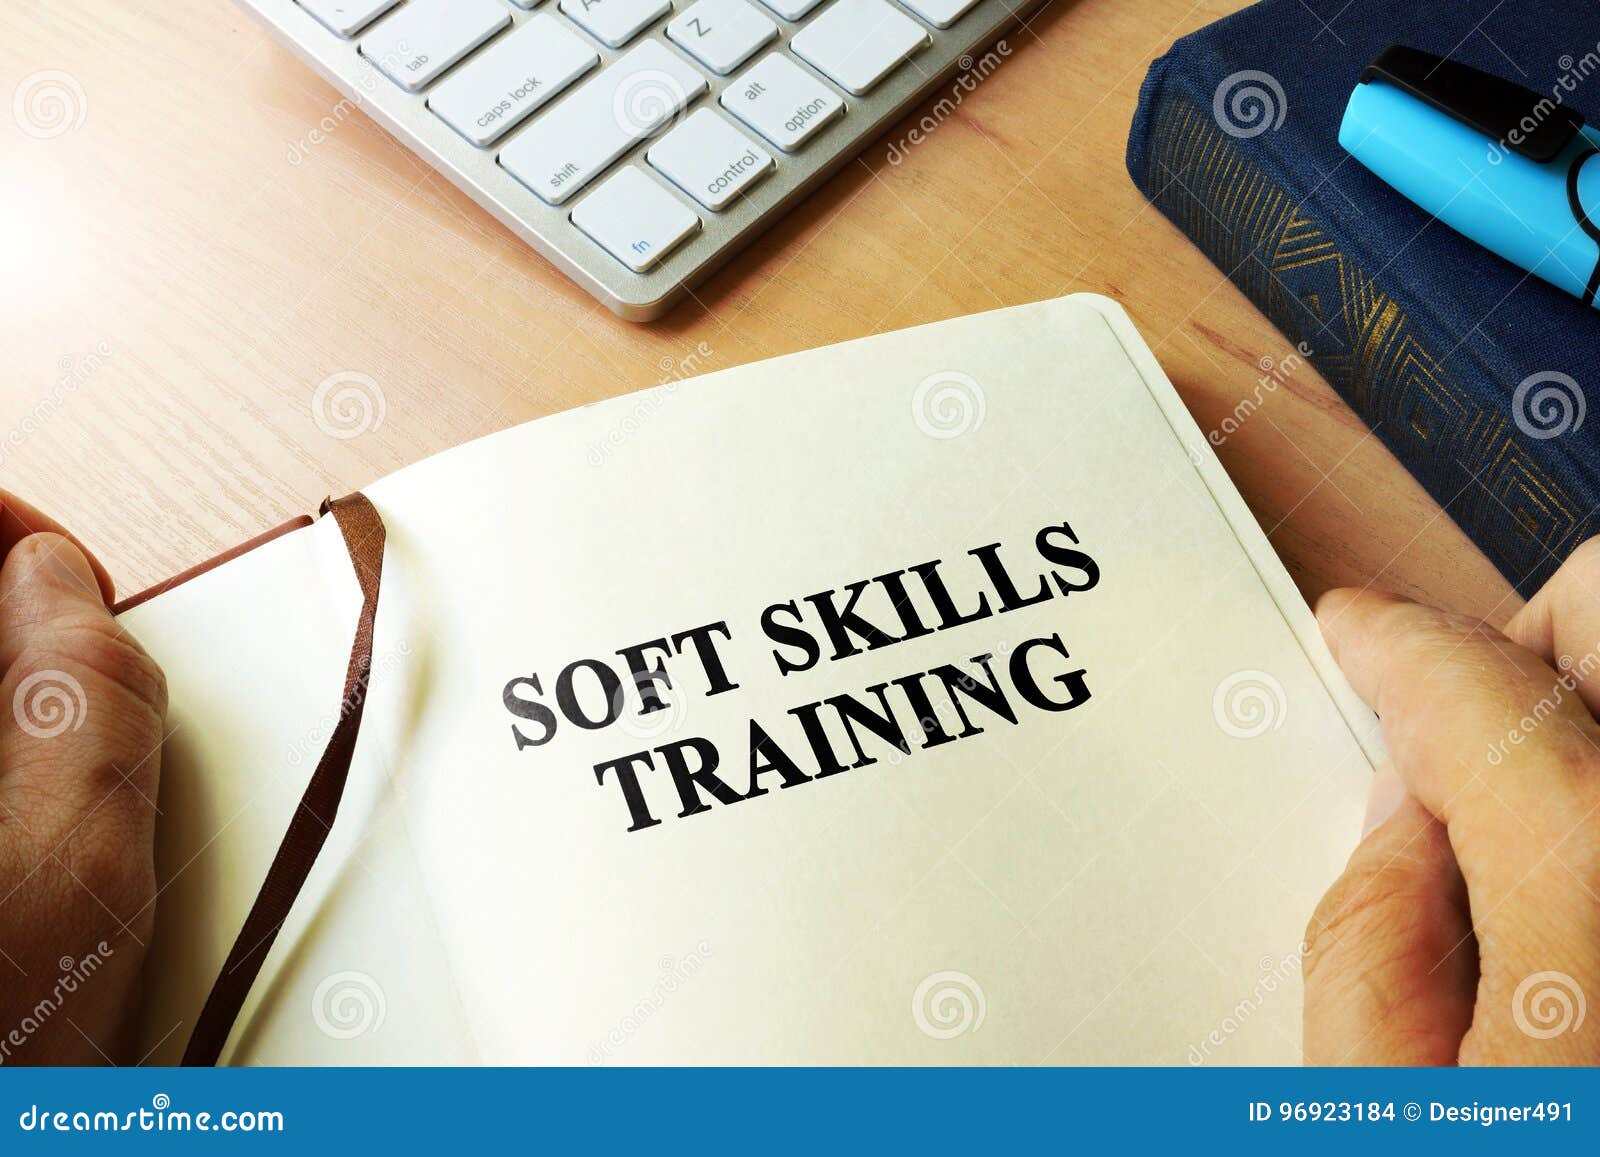 soft skills training.